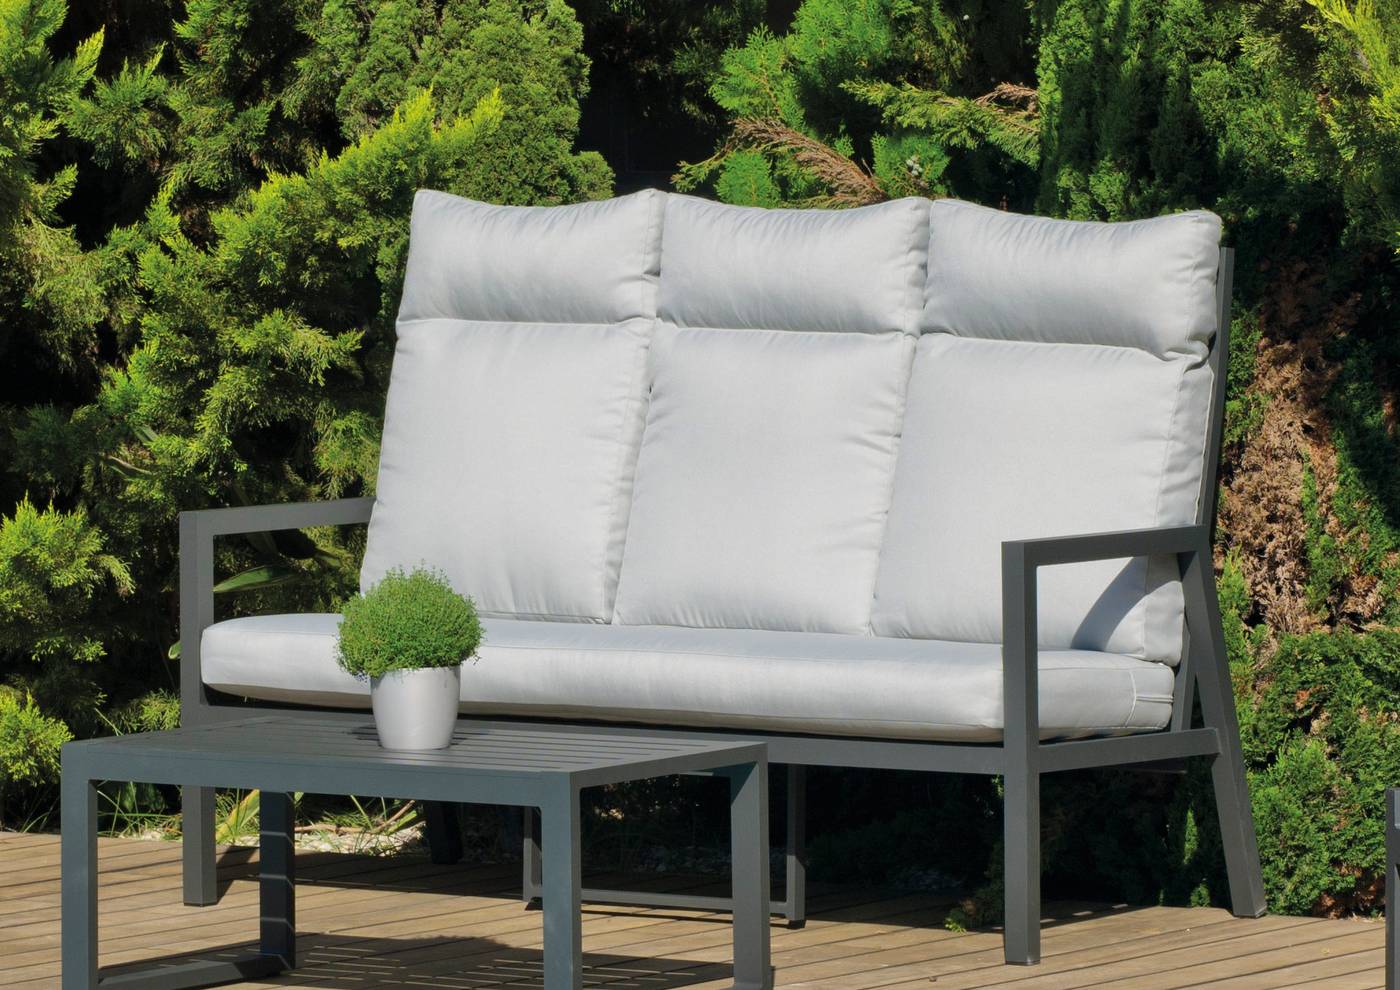 Set Aluminio Haston-8 - Conjunto aluminio: sofá 3 plazas + 2 sillones + mesa de centro + cojines. Colores: blanco, plata, antracita o bronce.